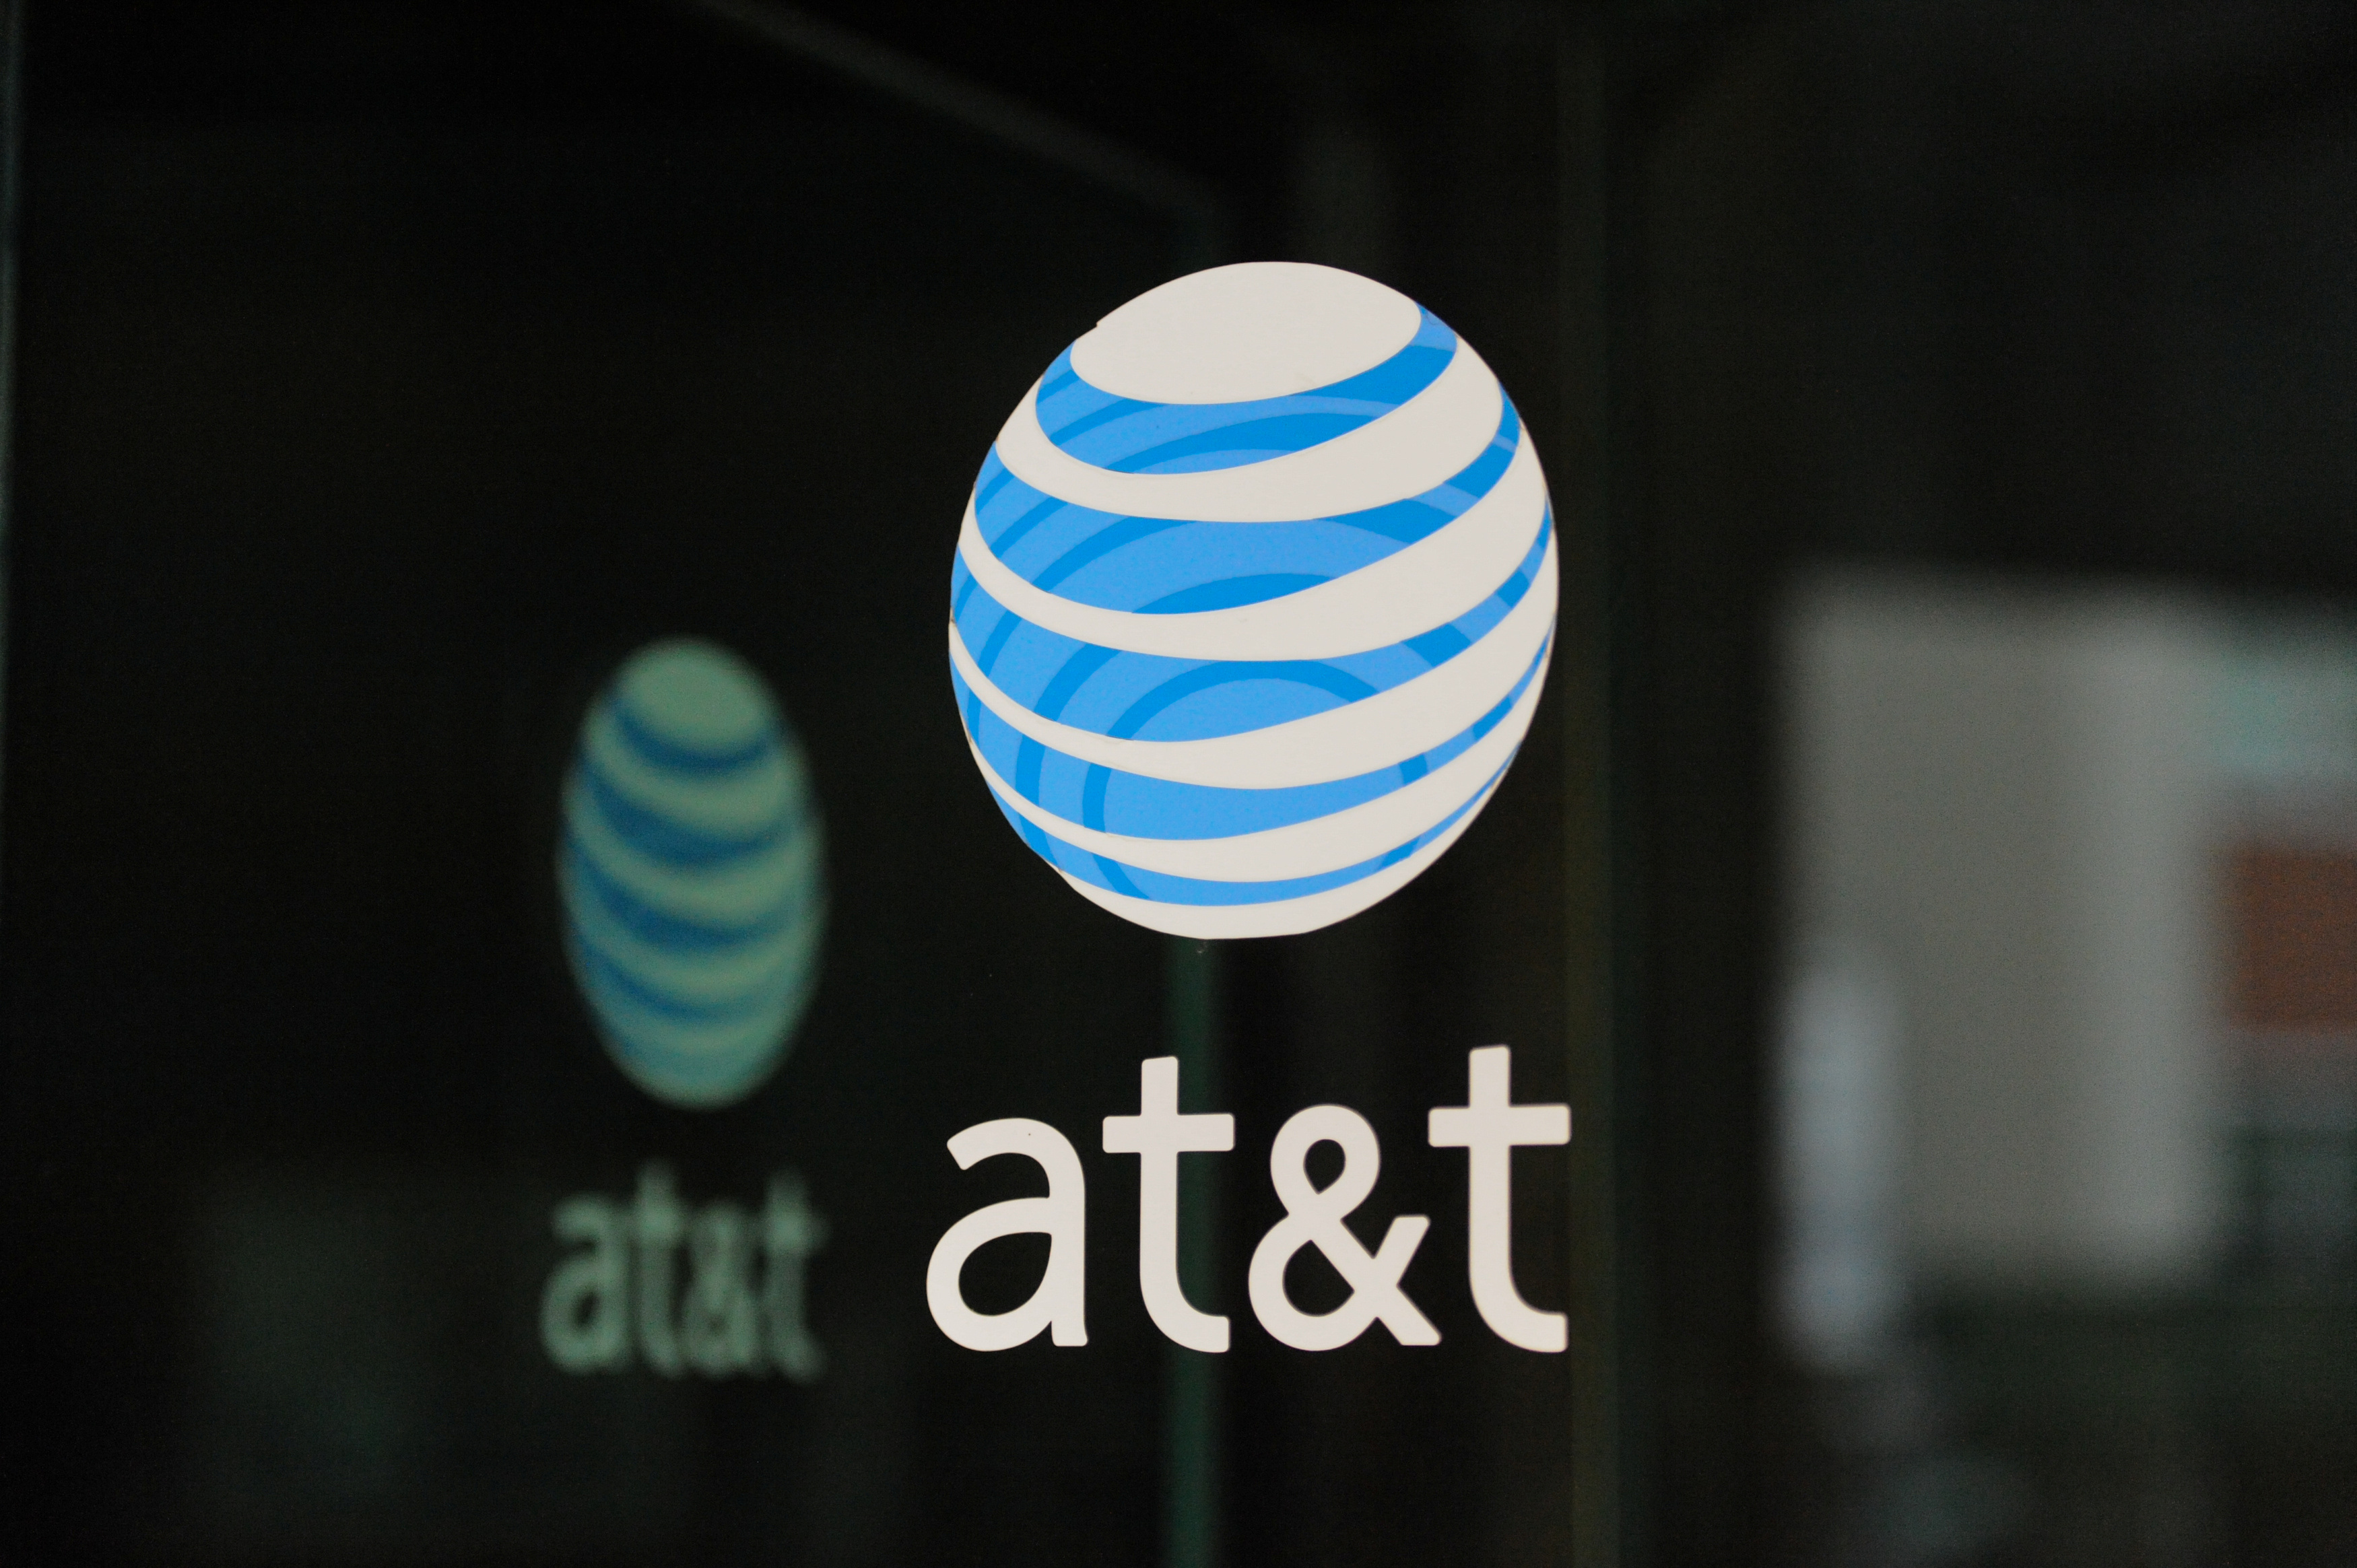 An AT&T logo is seen at a AT&T building in New York City